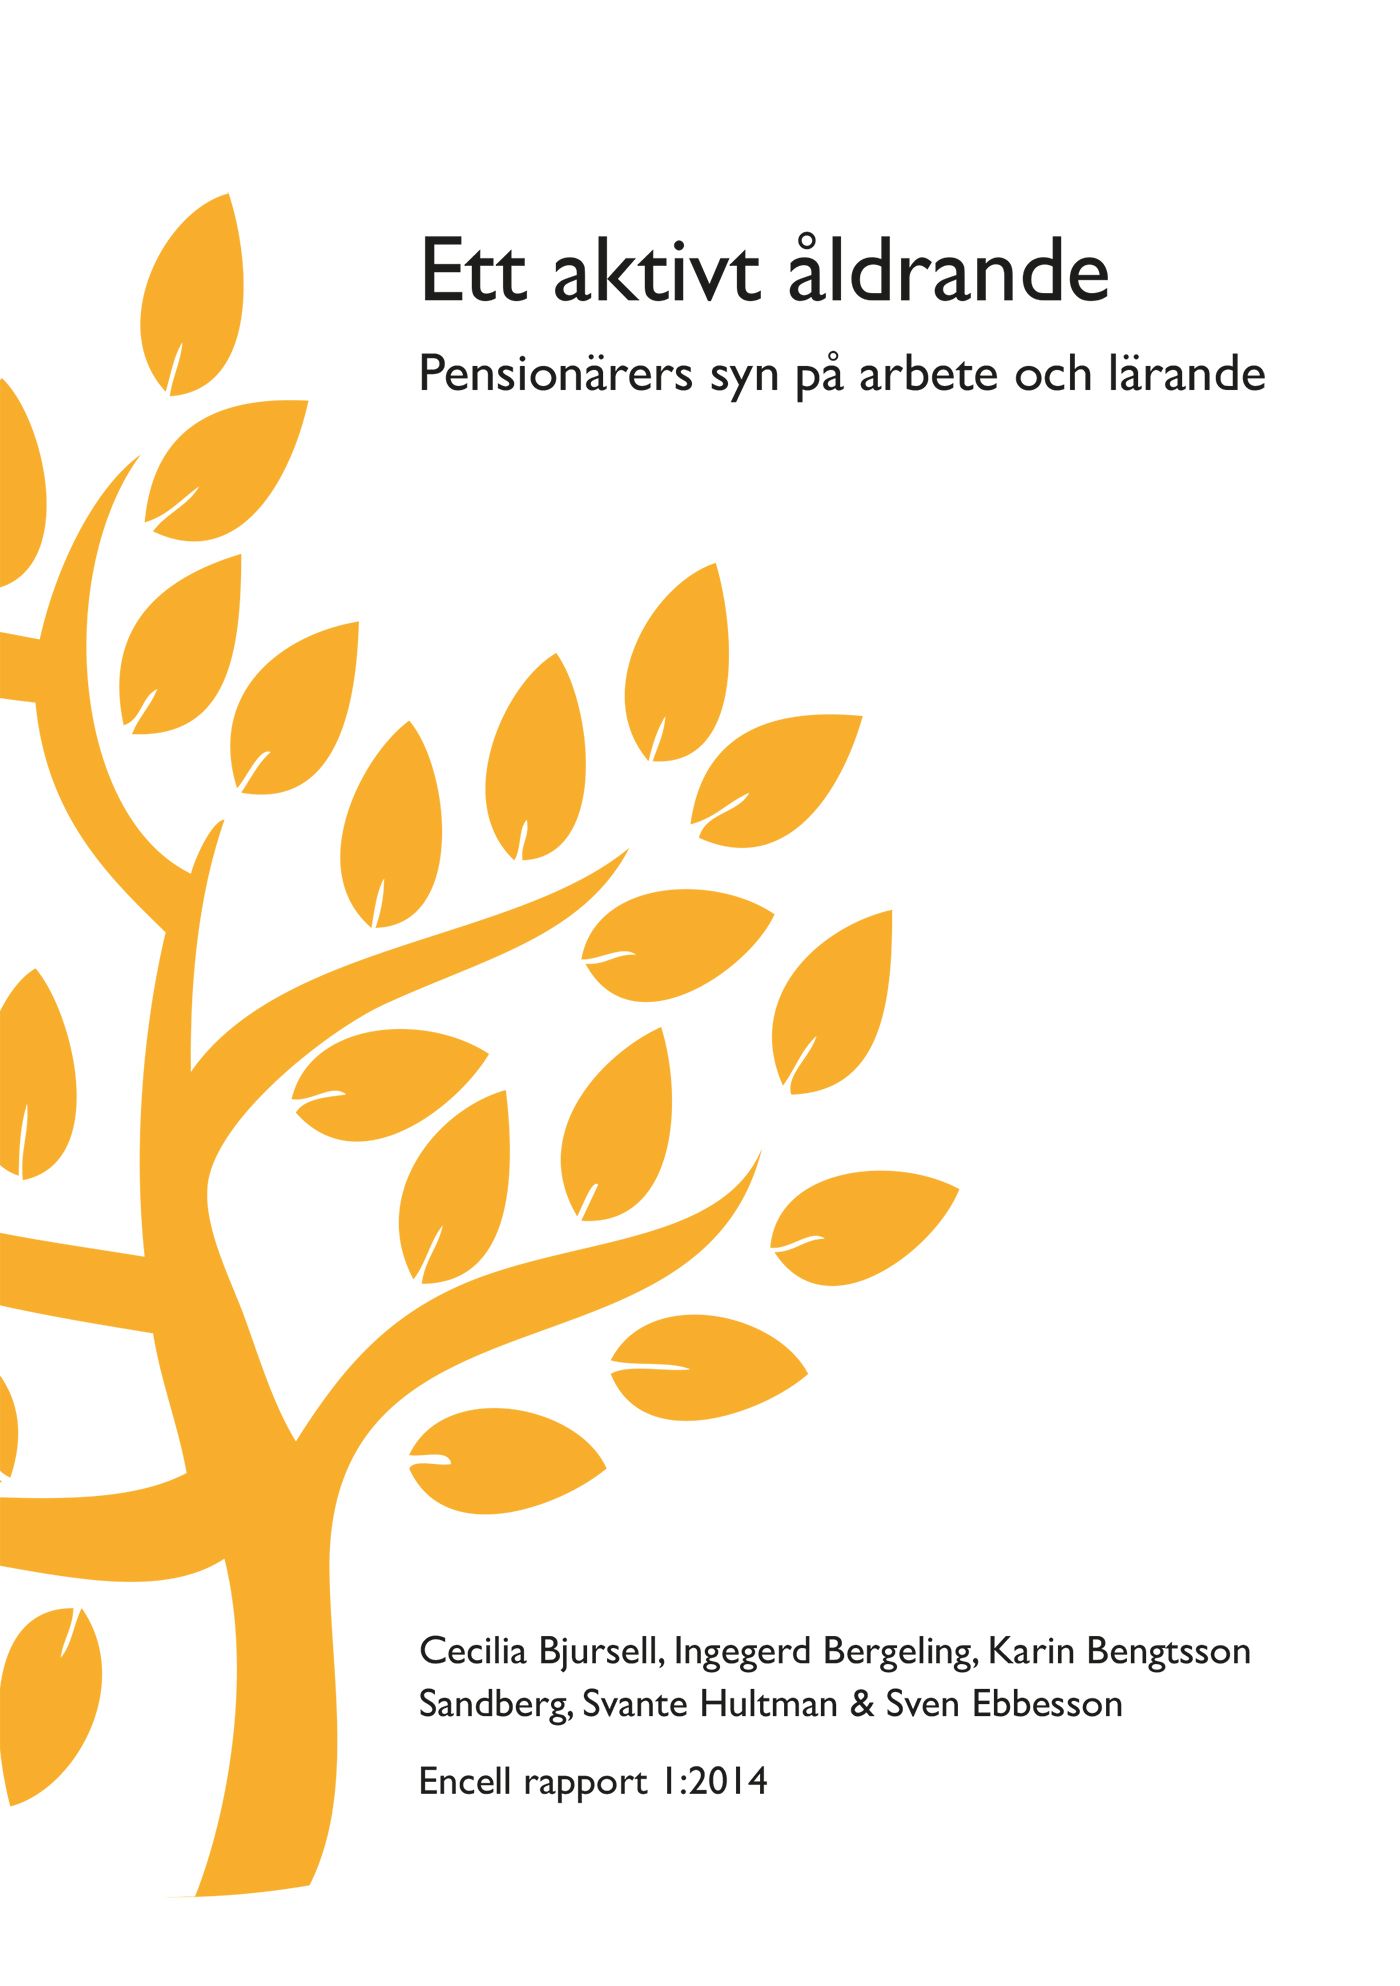 Ett aktivt åldrande, e-bog af Karin Bengtsson Sandberg, Ingegerd Bergeling, Cecilia Bjursell, Sven Ebbesson, Svante Hultman